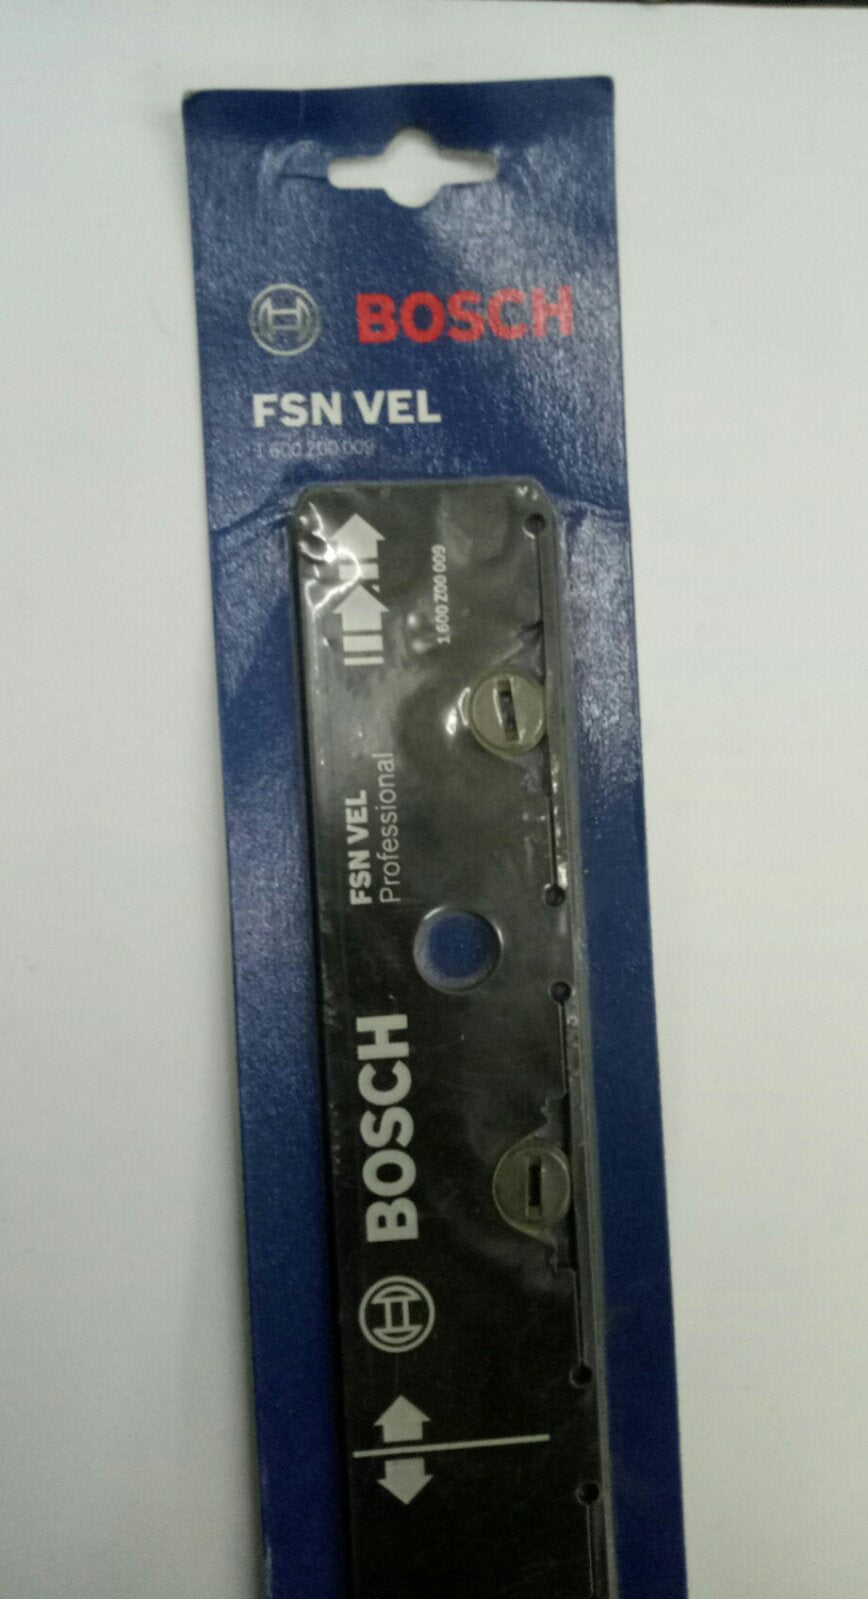 BOSCH 1600Z00009 FSN VEL for Connecting Guide Rails